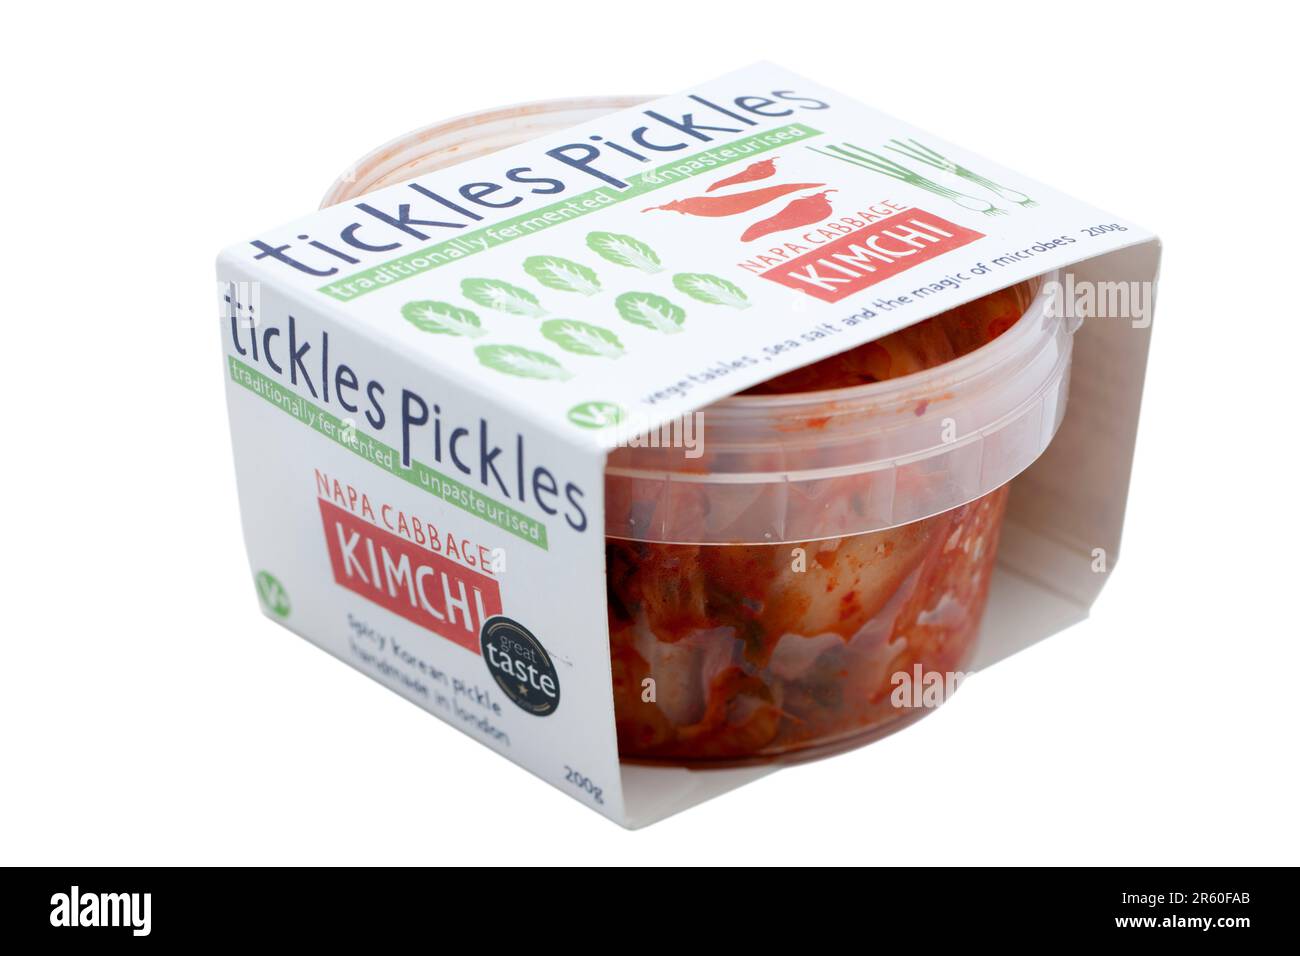 Tub of Tickles' Pickles Fresh Kimchi 200g Stock Photo